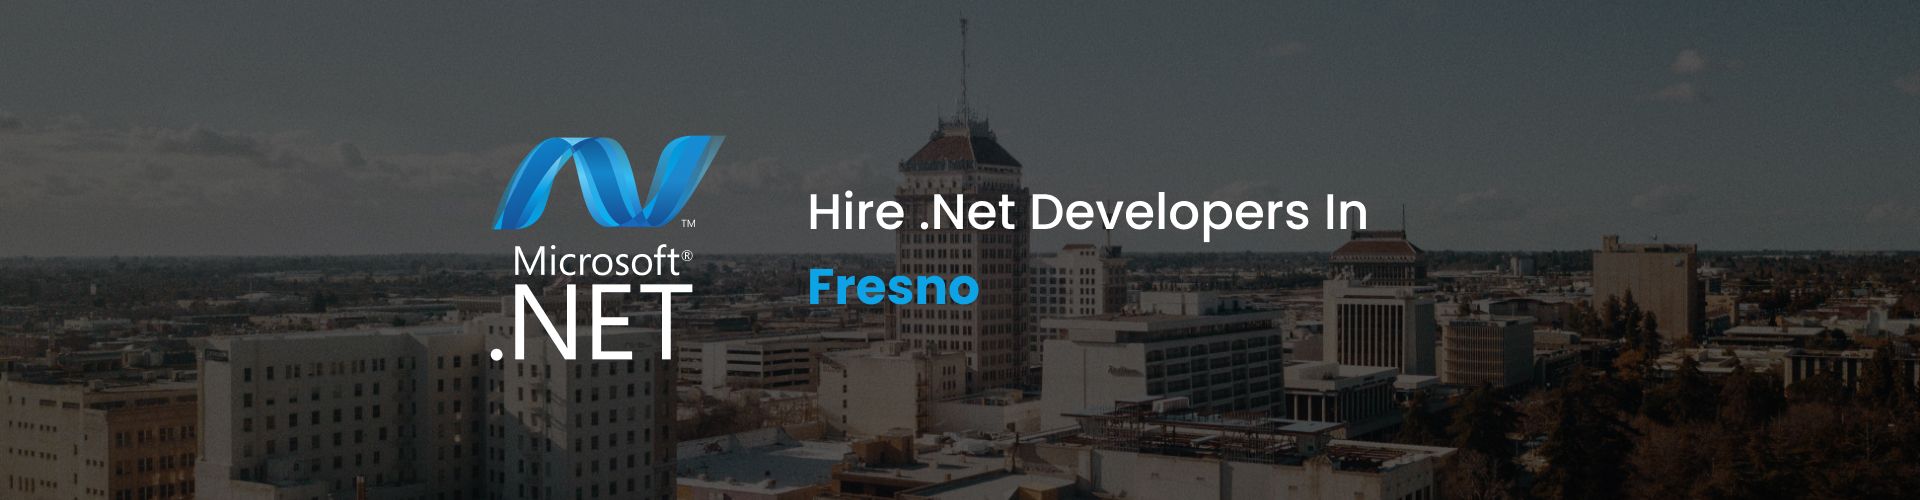 hire .net developers in fresno